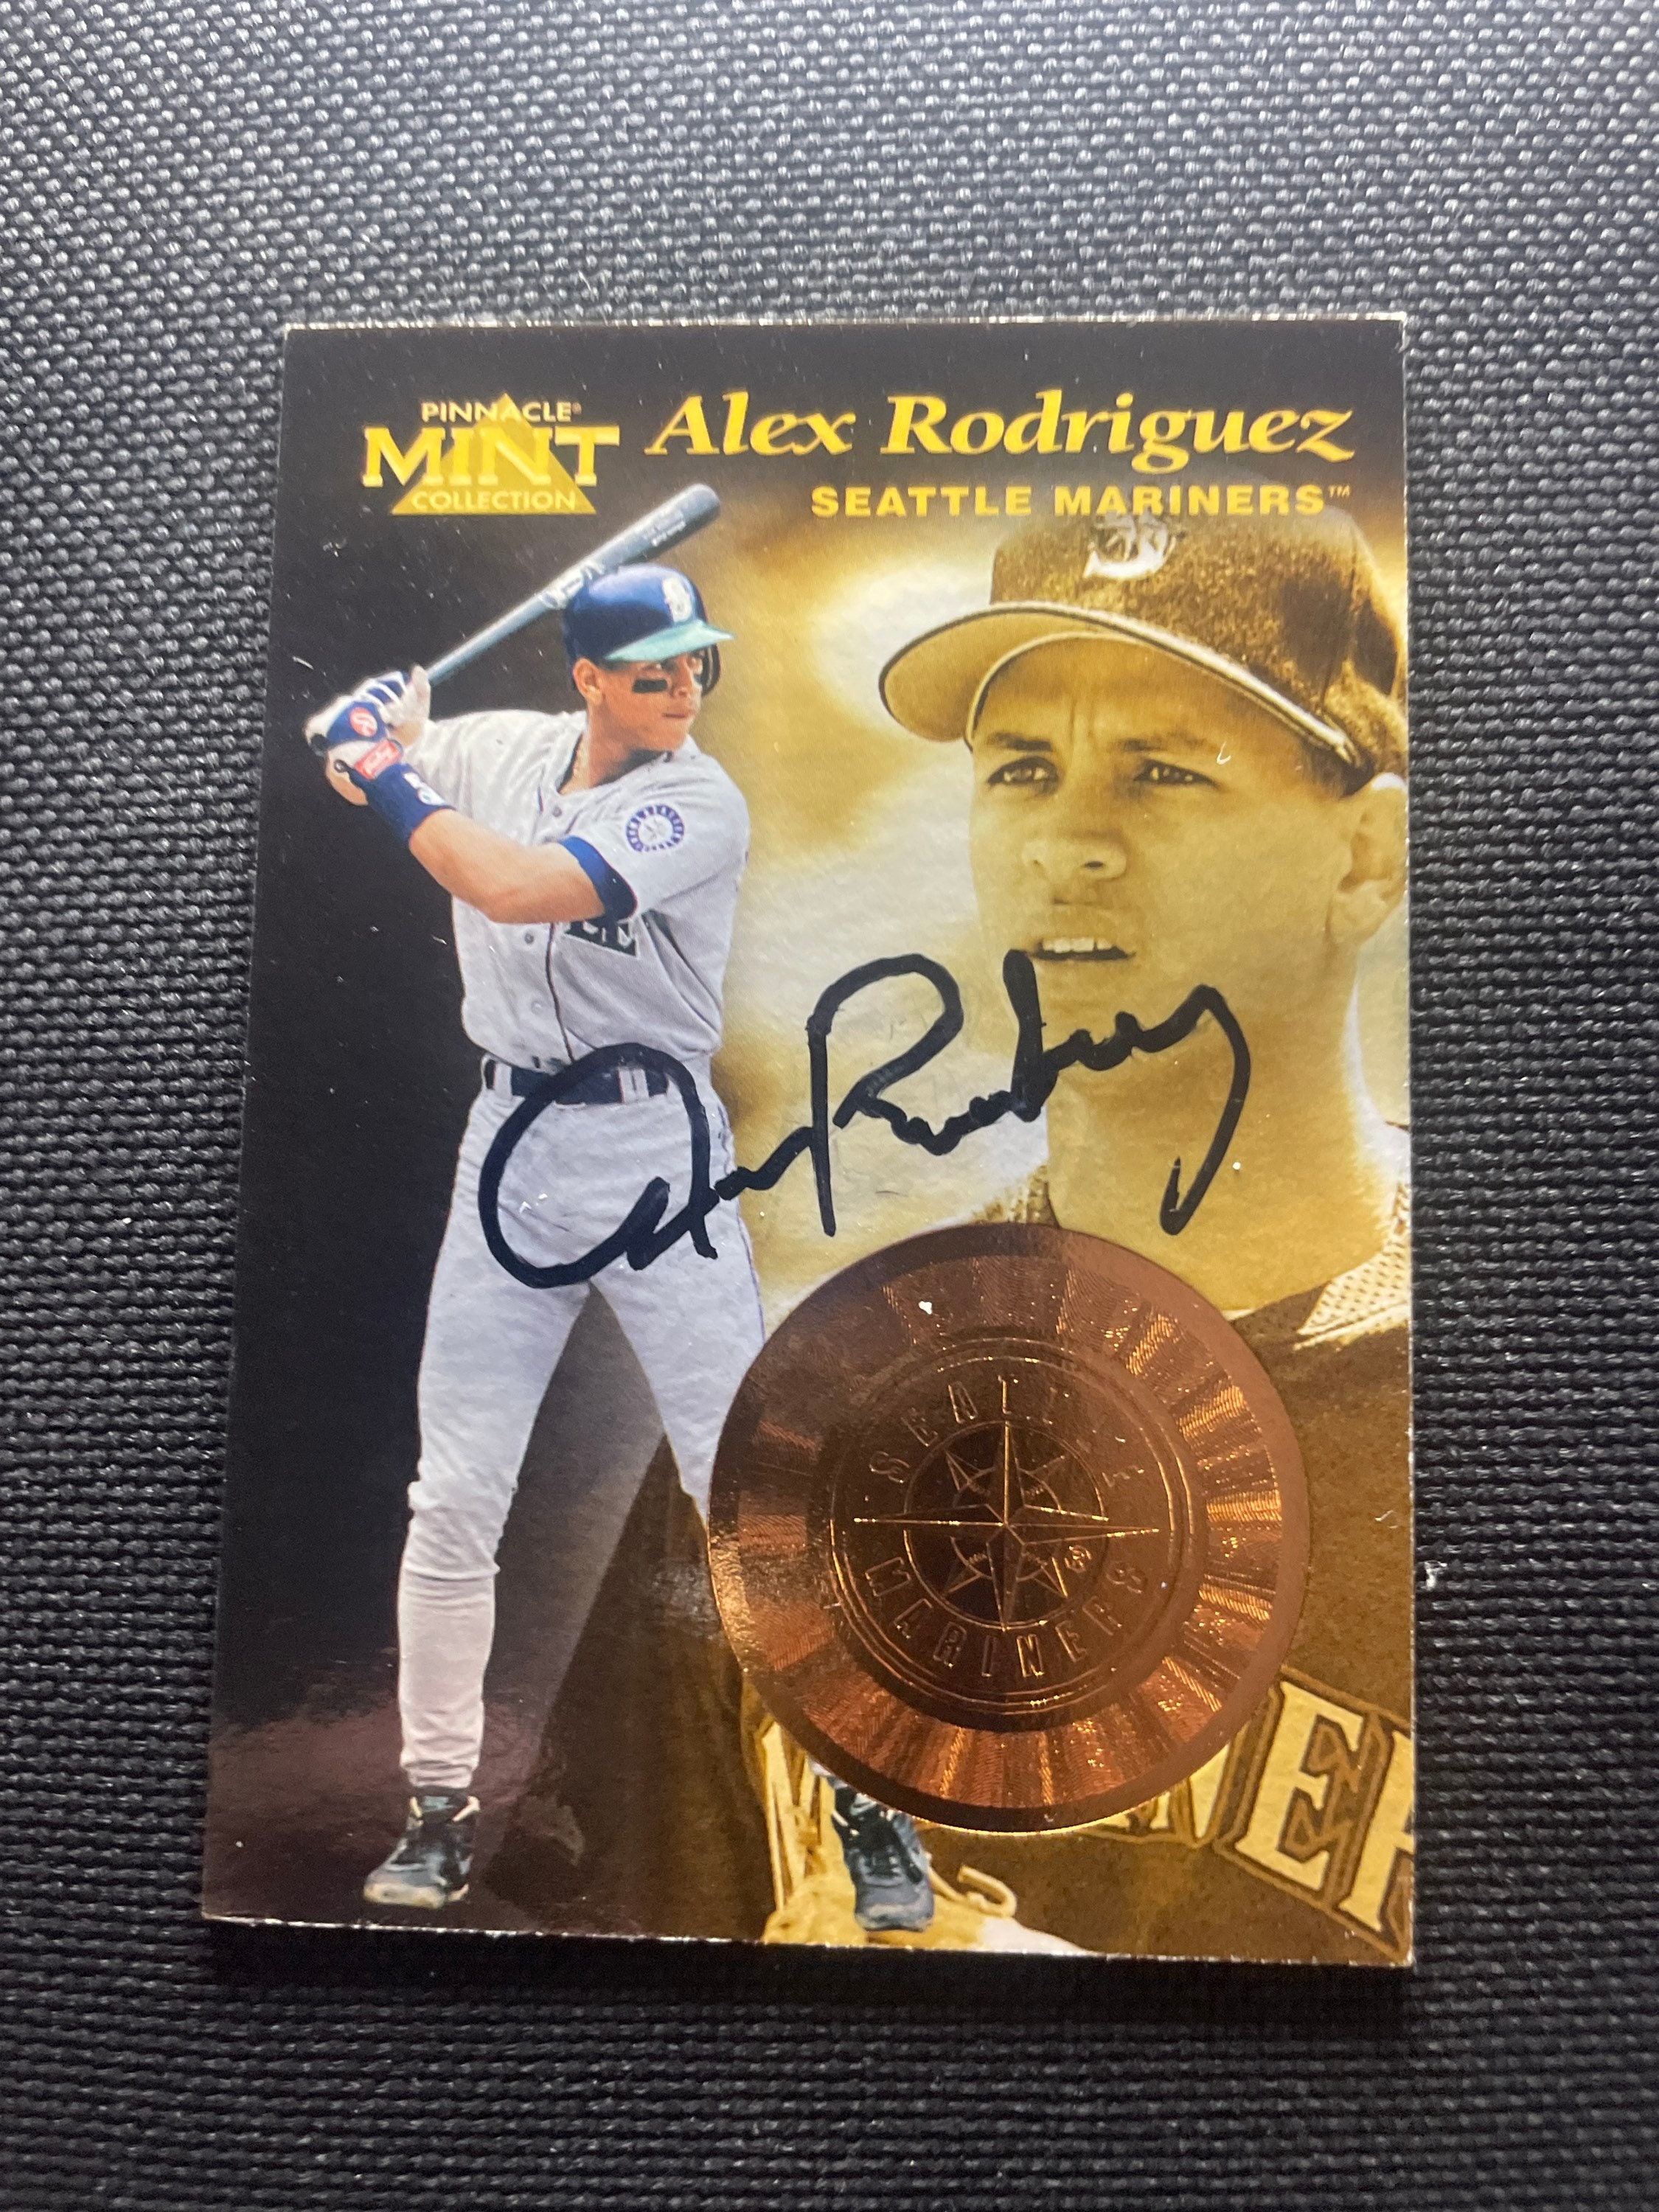 Julio Rodriguez Autographed Seattle Custom White Baseball Jersey 10-Count  Lot - JSA